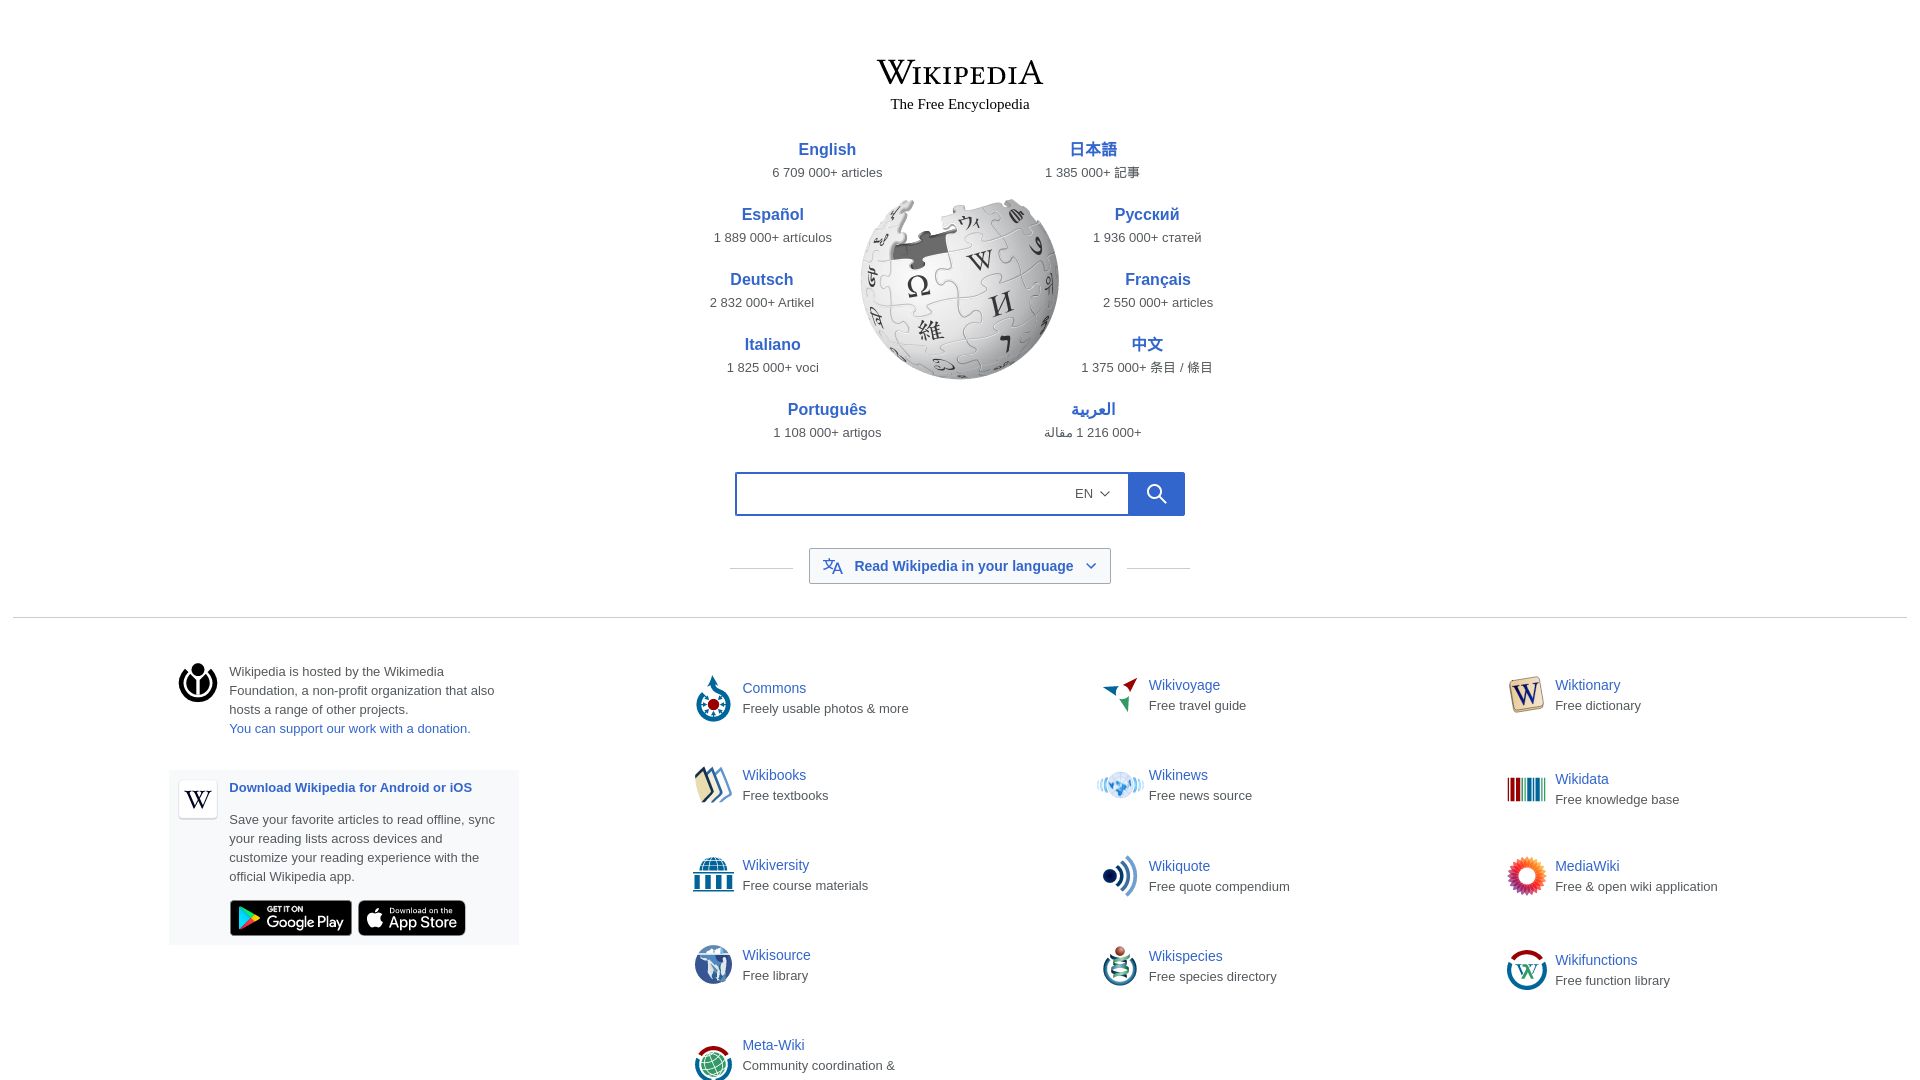 Webseitenstatus wikipedia.com ist   ONLINE